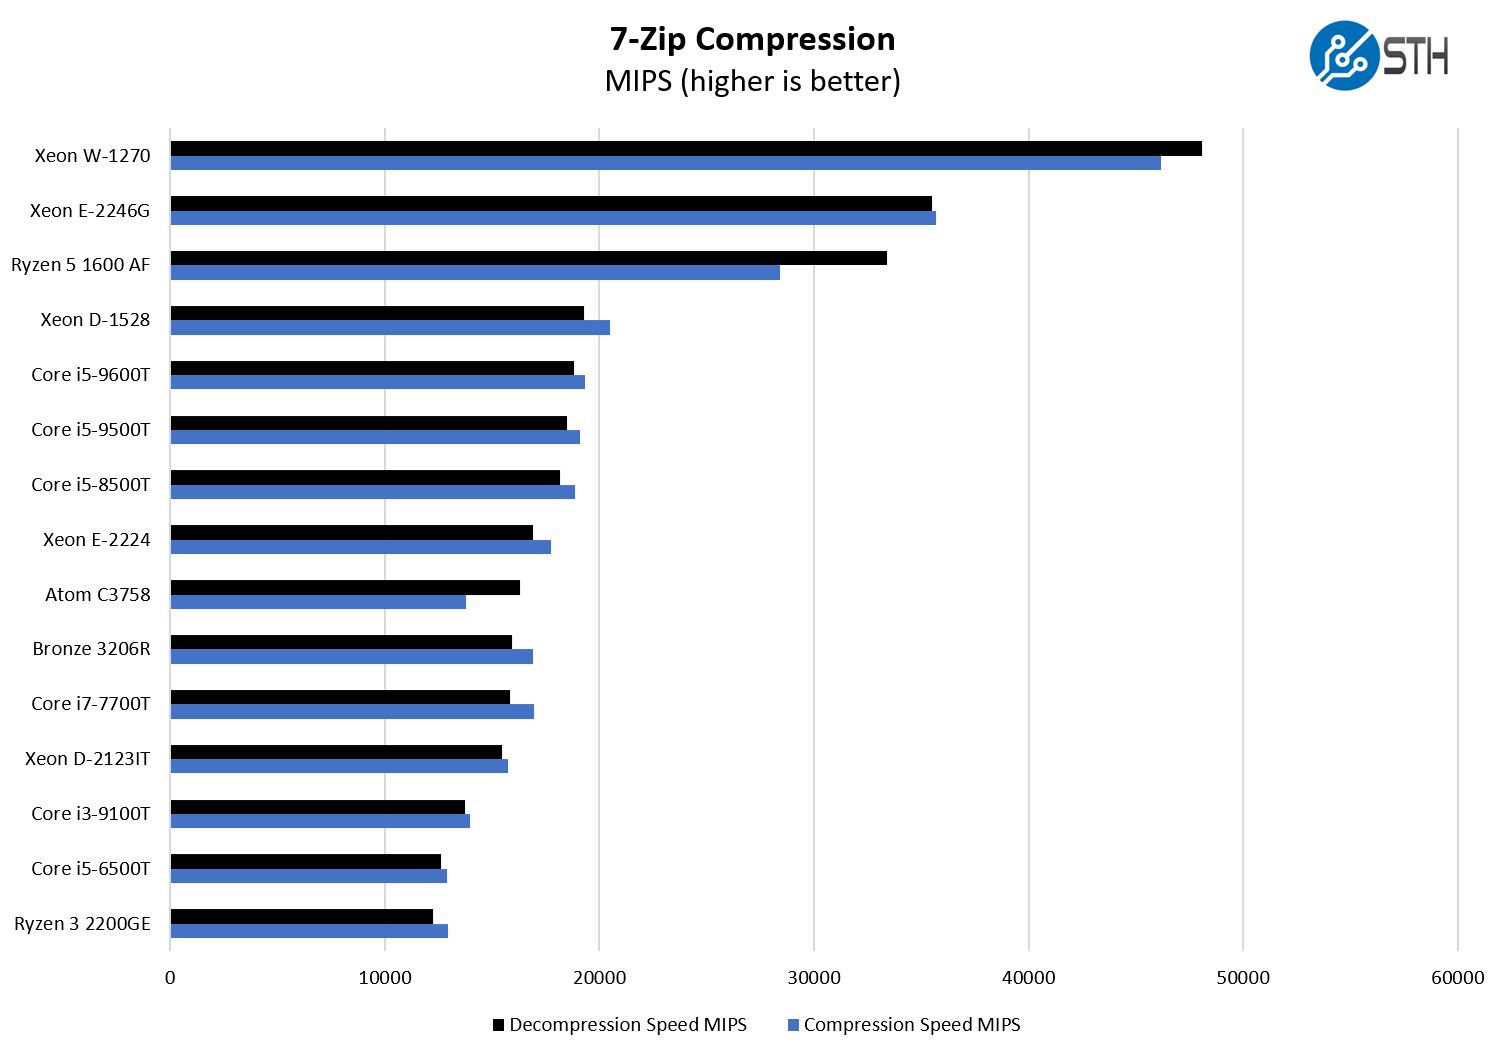 Intel Core I5 8500T And Core I5 6500T 7zip Compression Benchmark